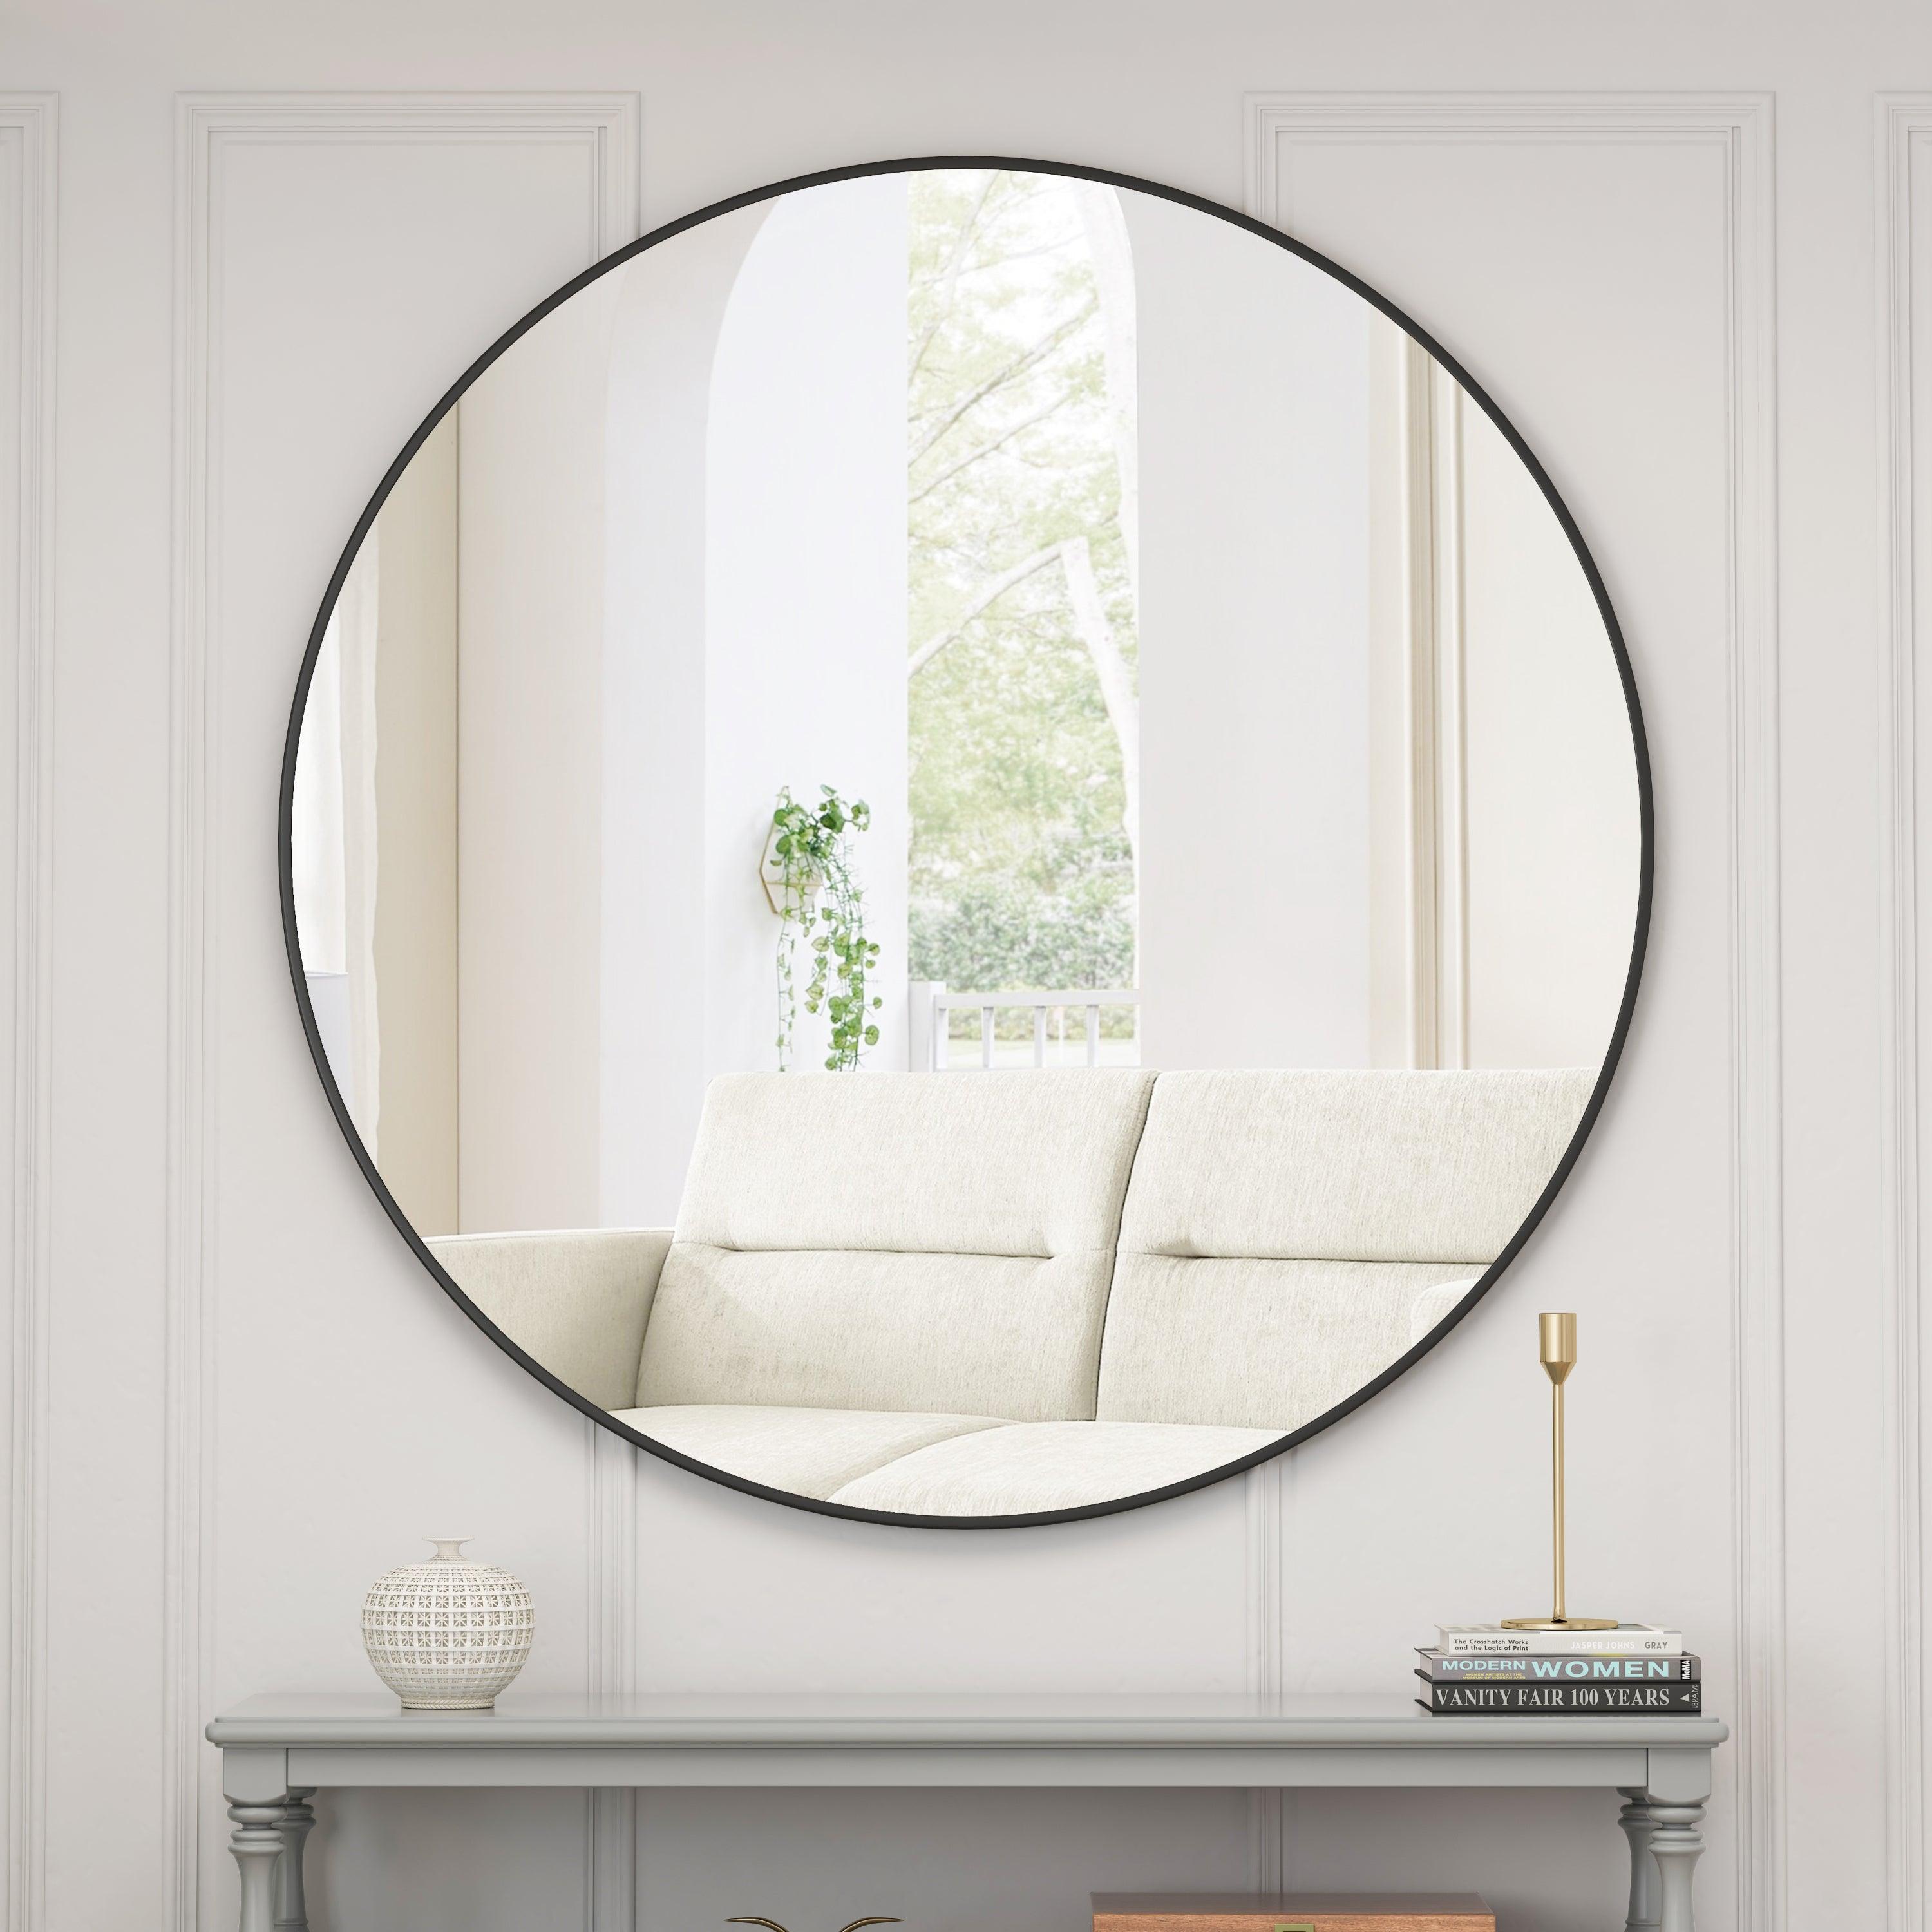 39" Wall Mounted Black Circular Mirror, For Bathroom, Living Room, Bedroom Wall Decor